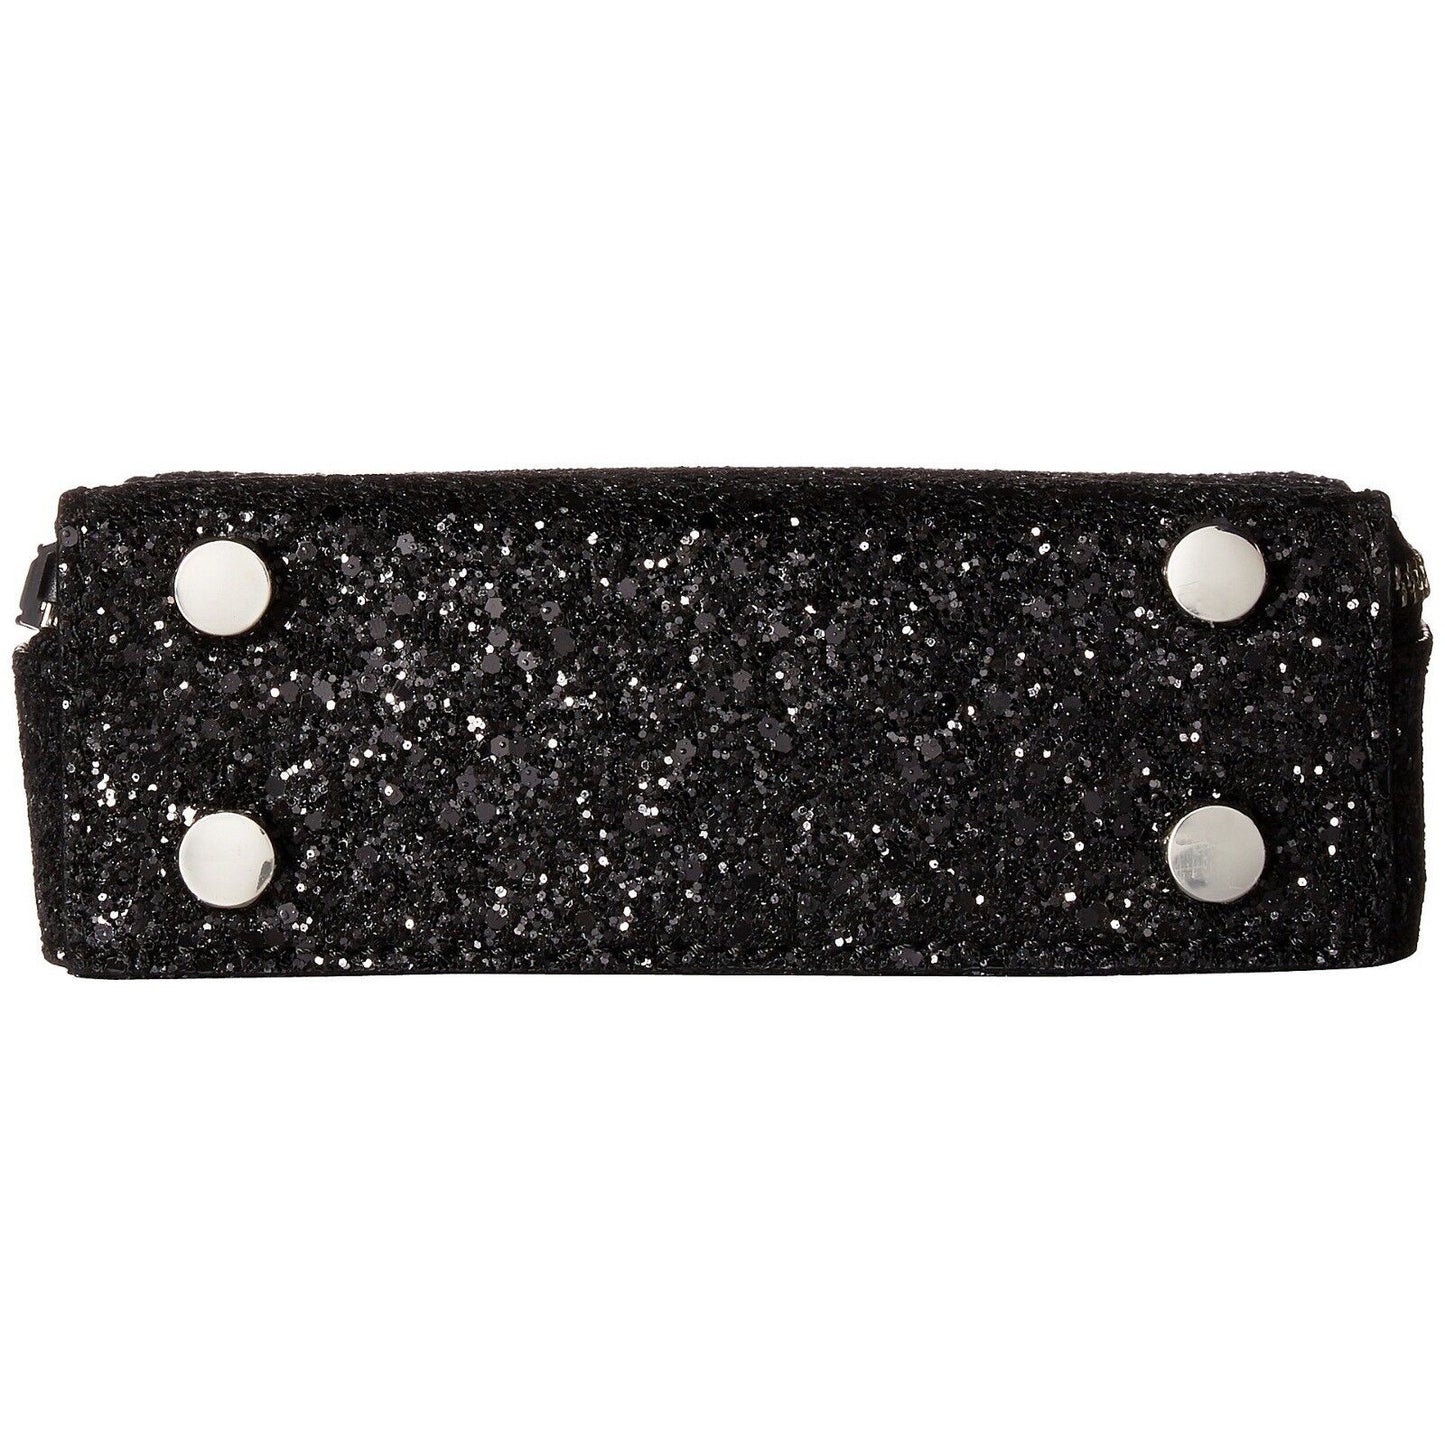 Rebecca Minkoff Black Glitter Studded Leather Box Crossbody Bag NWT